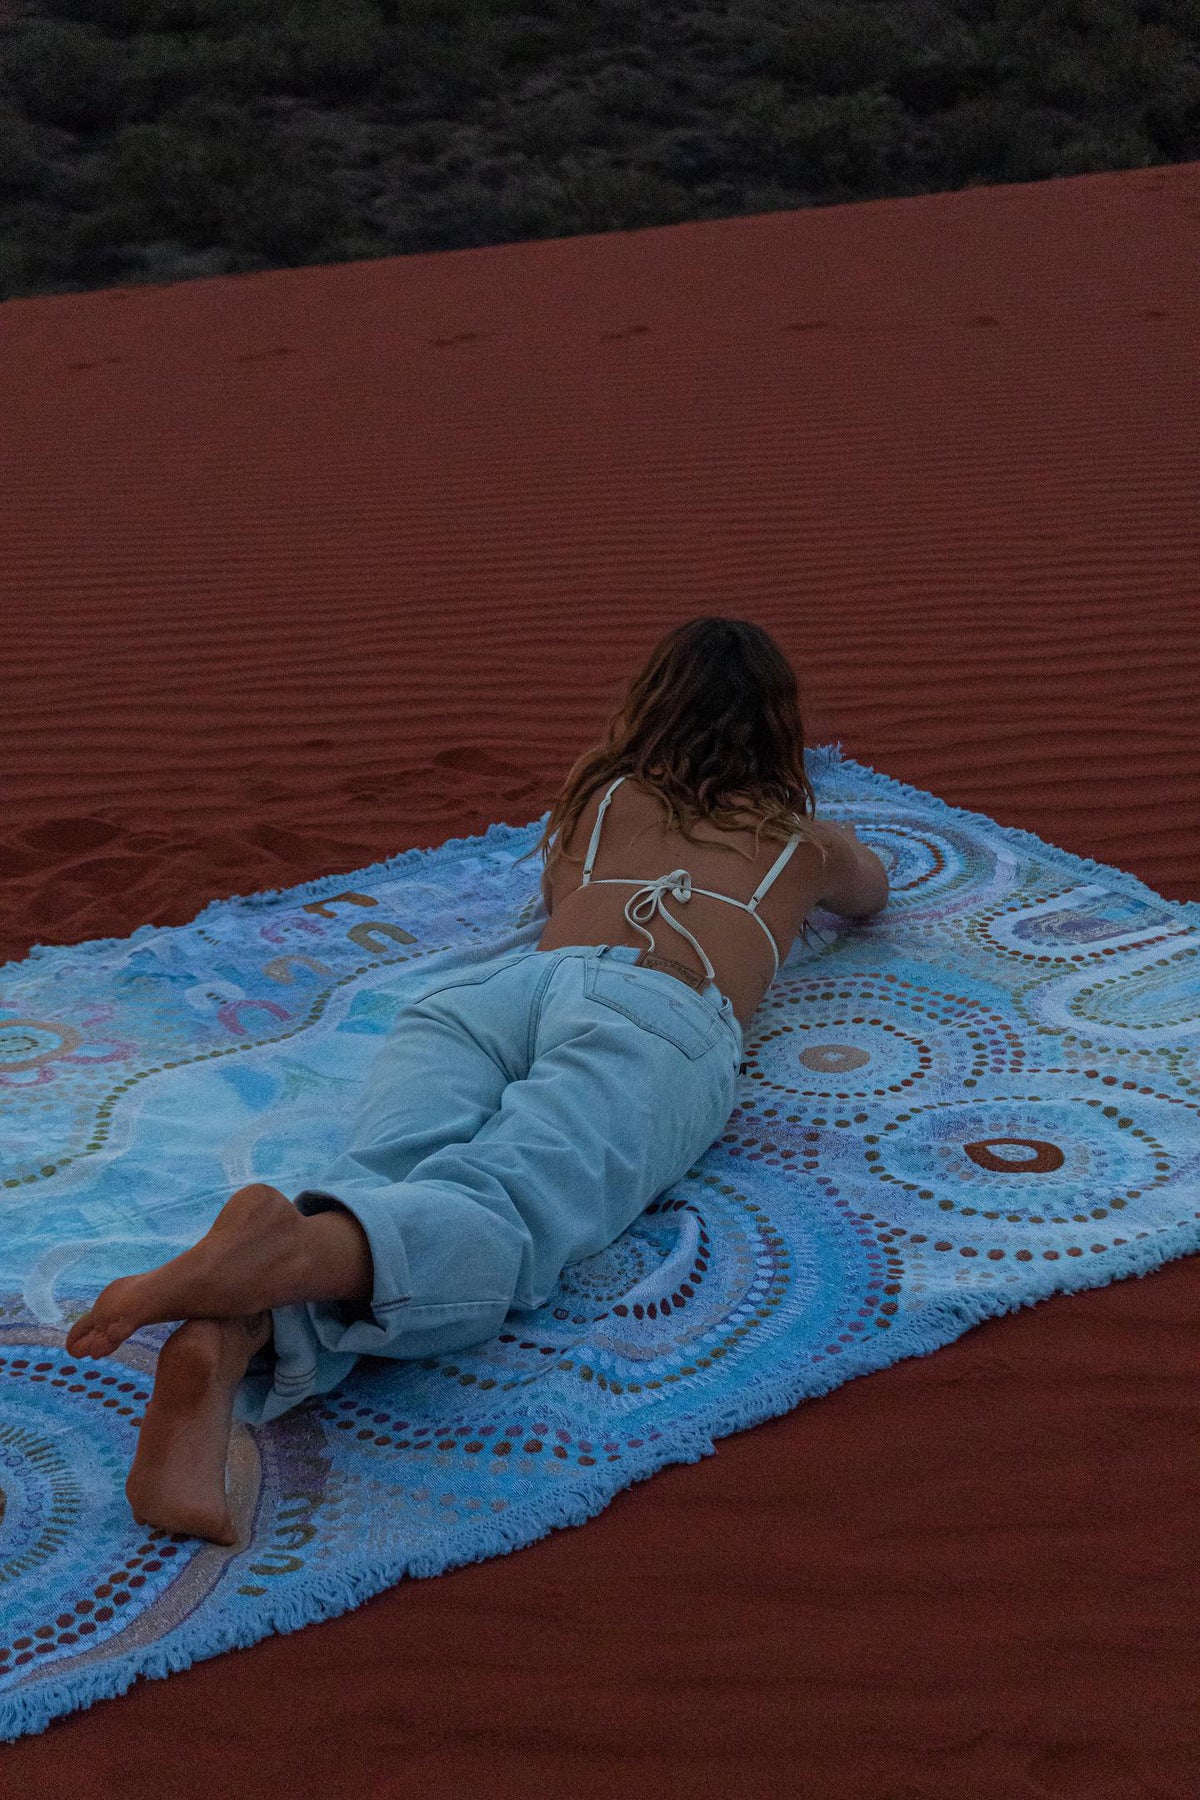 Indigenous Throw "Blue Ocean" By Natalie Jade x Drift - Preorder Now - Back Soon -